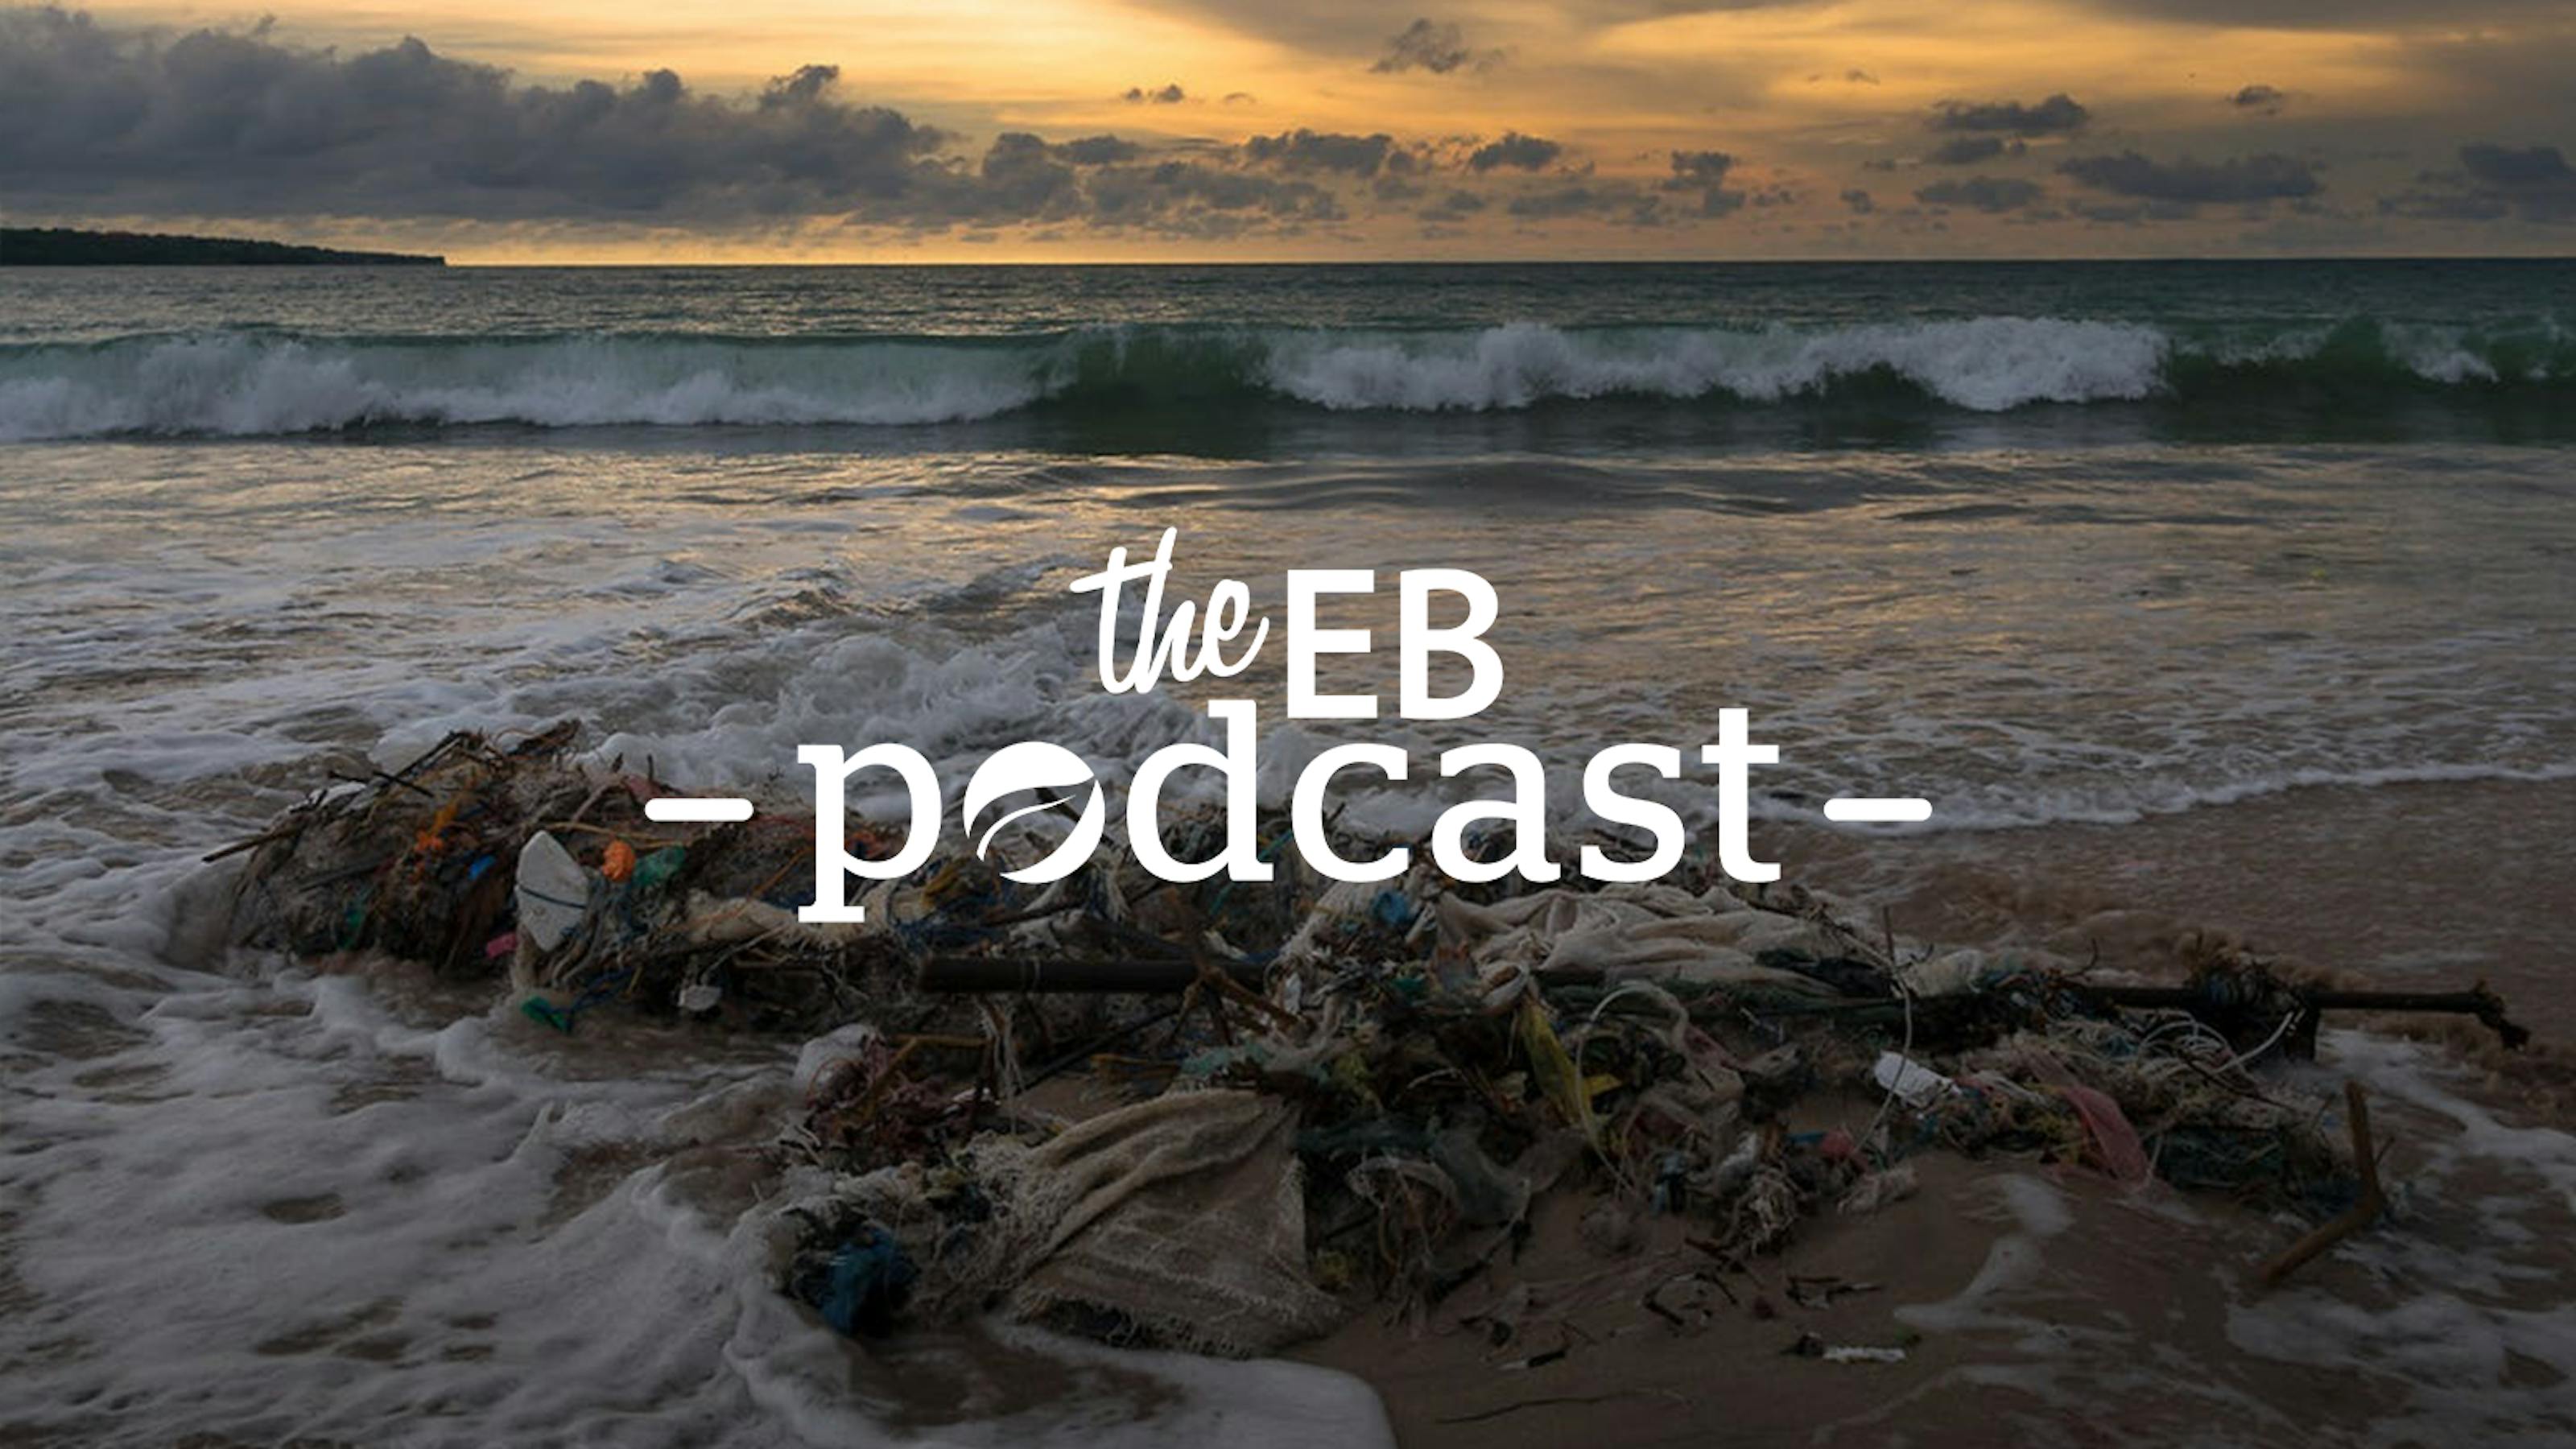 The EB Podcast talked to Rob Kaplan